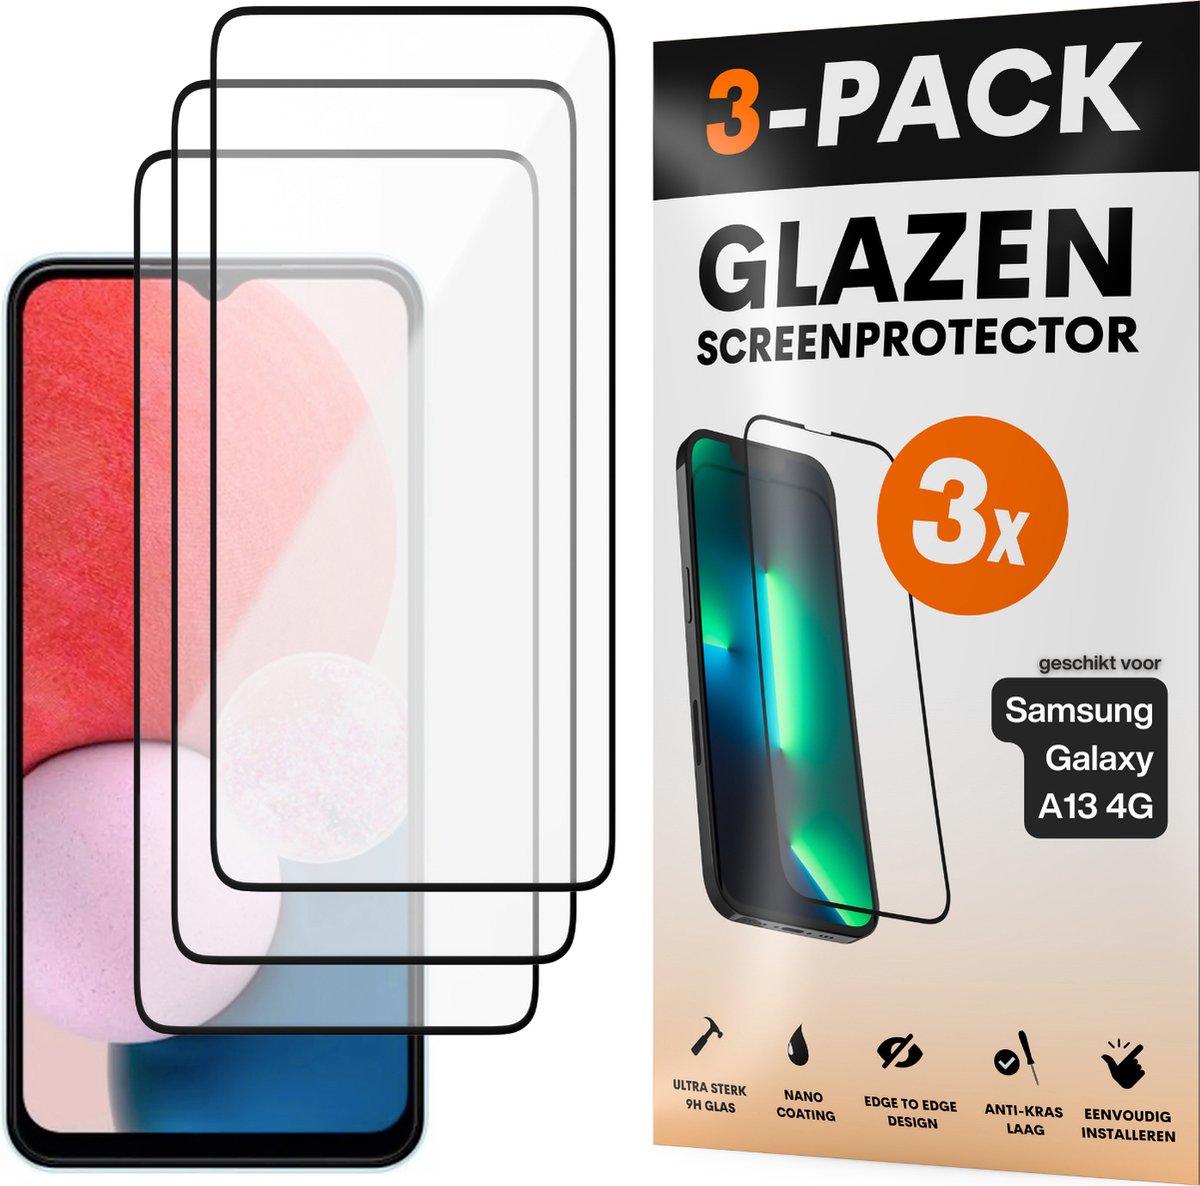 Screenprotector - Geschikt voor Samsung Galaxy A13 4G - Gehard Glas - Full Cover Tempered Glass - Case Friendly - 3 Pack